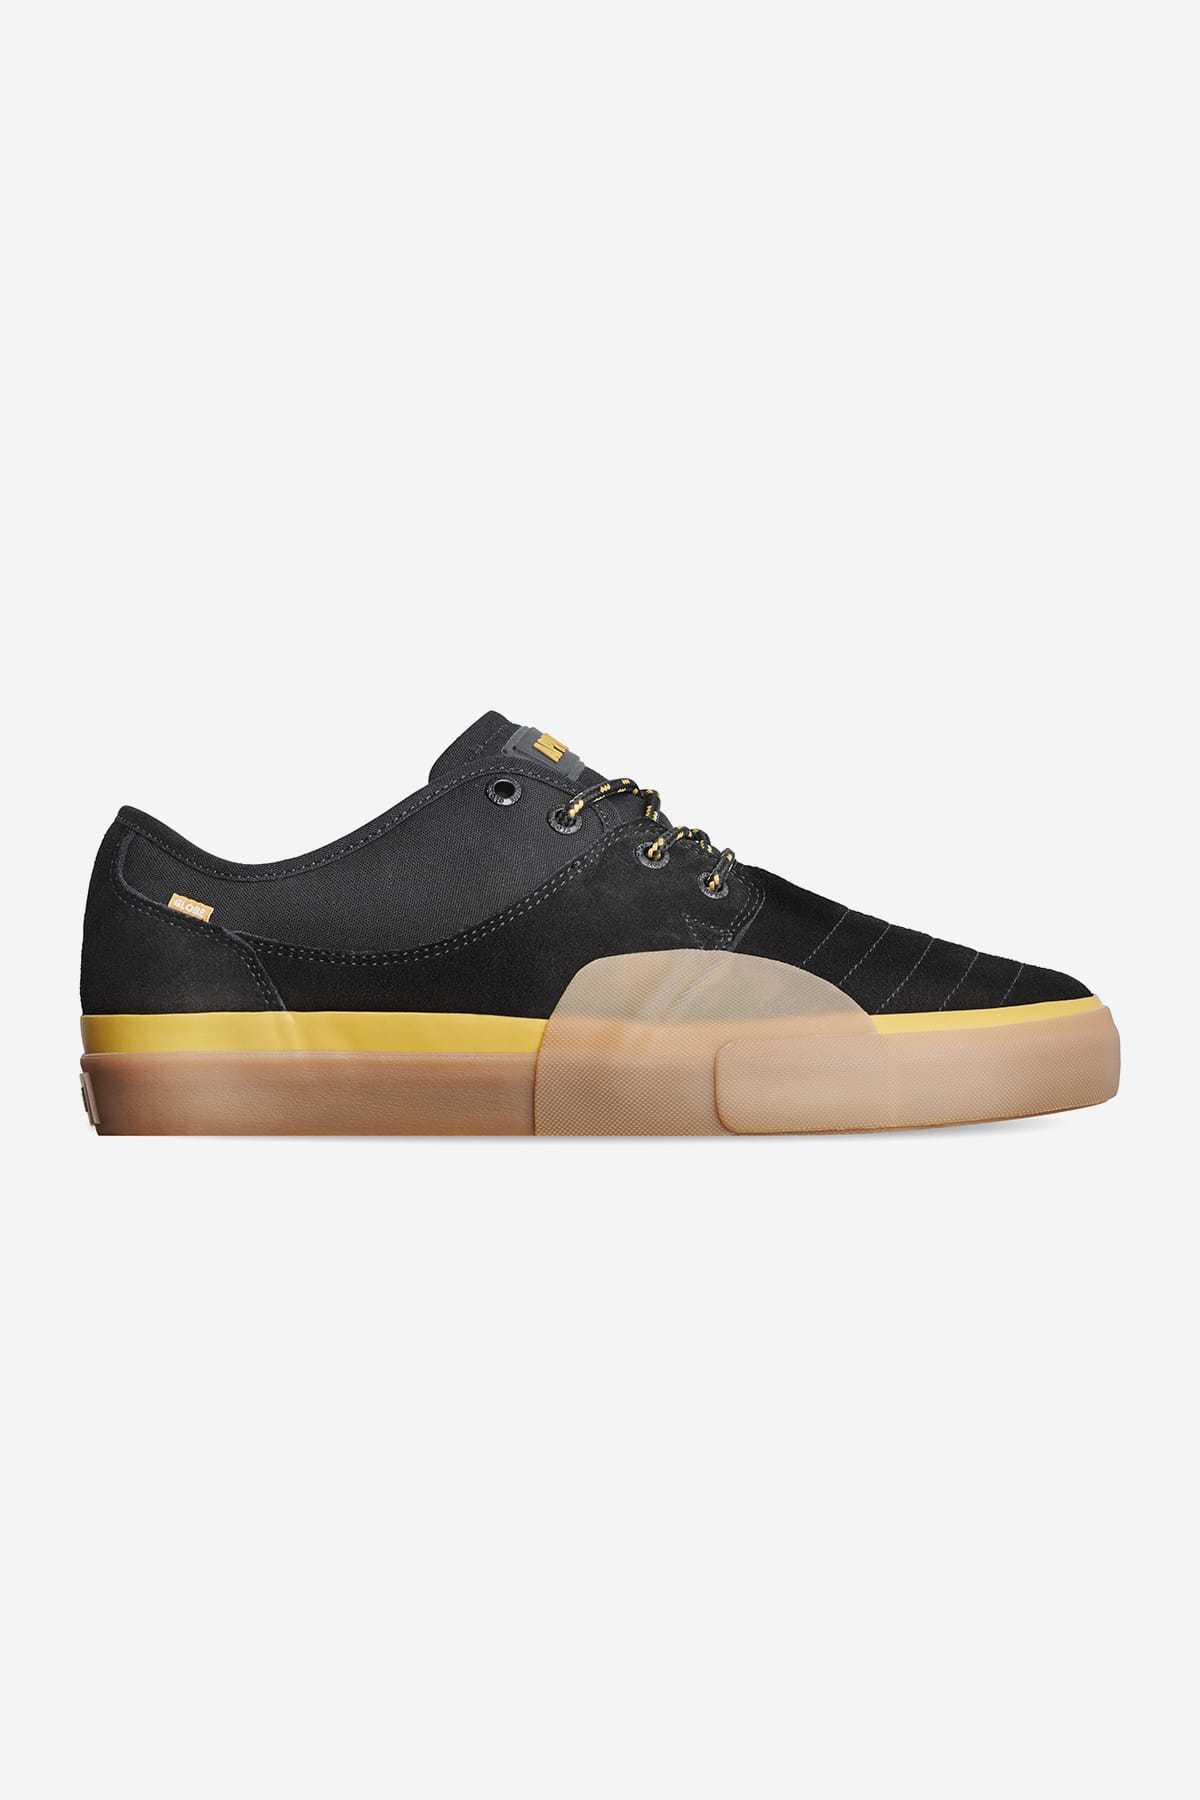 Globe - Mahalo Plus - Zwart/Mustard - skateboard Schoenen